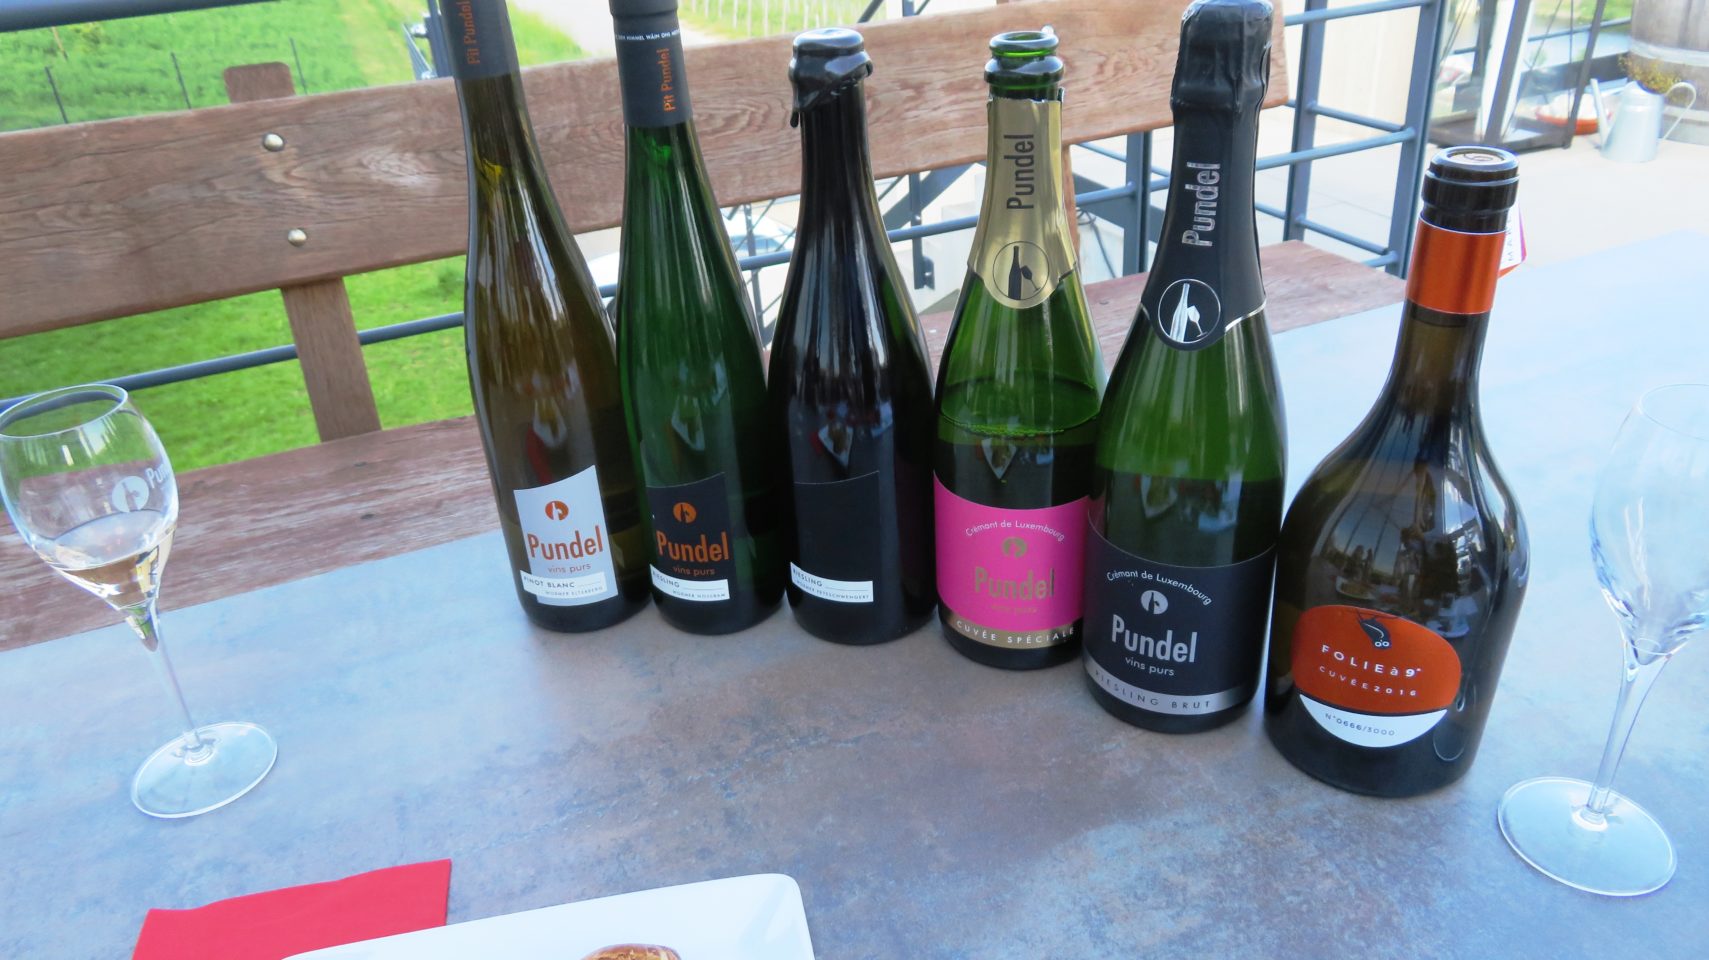 Selection of Pundel wines at Pundel vineyard in Wormeldange, em><strong>Luxembourg</strong></em>